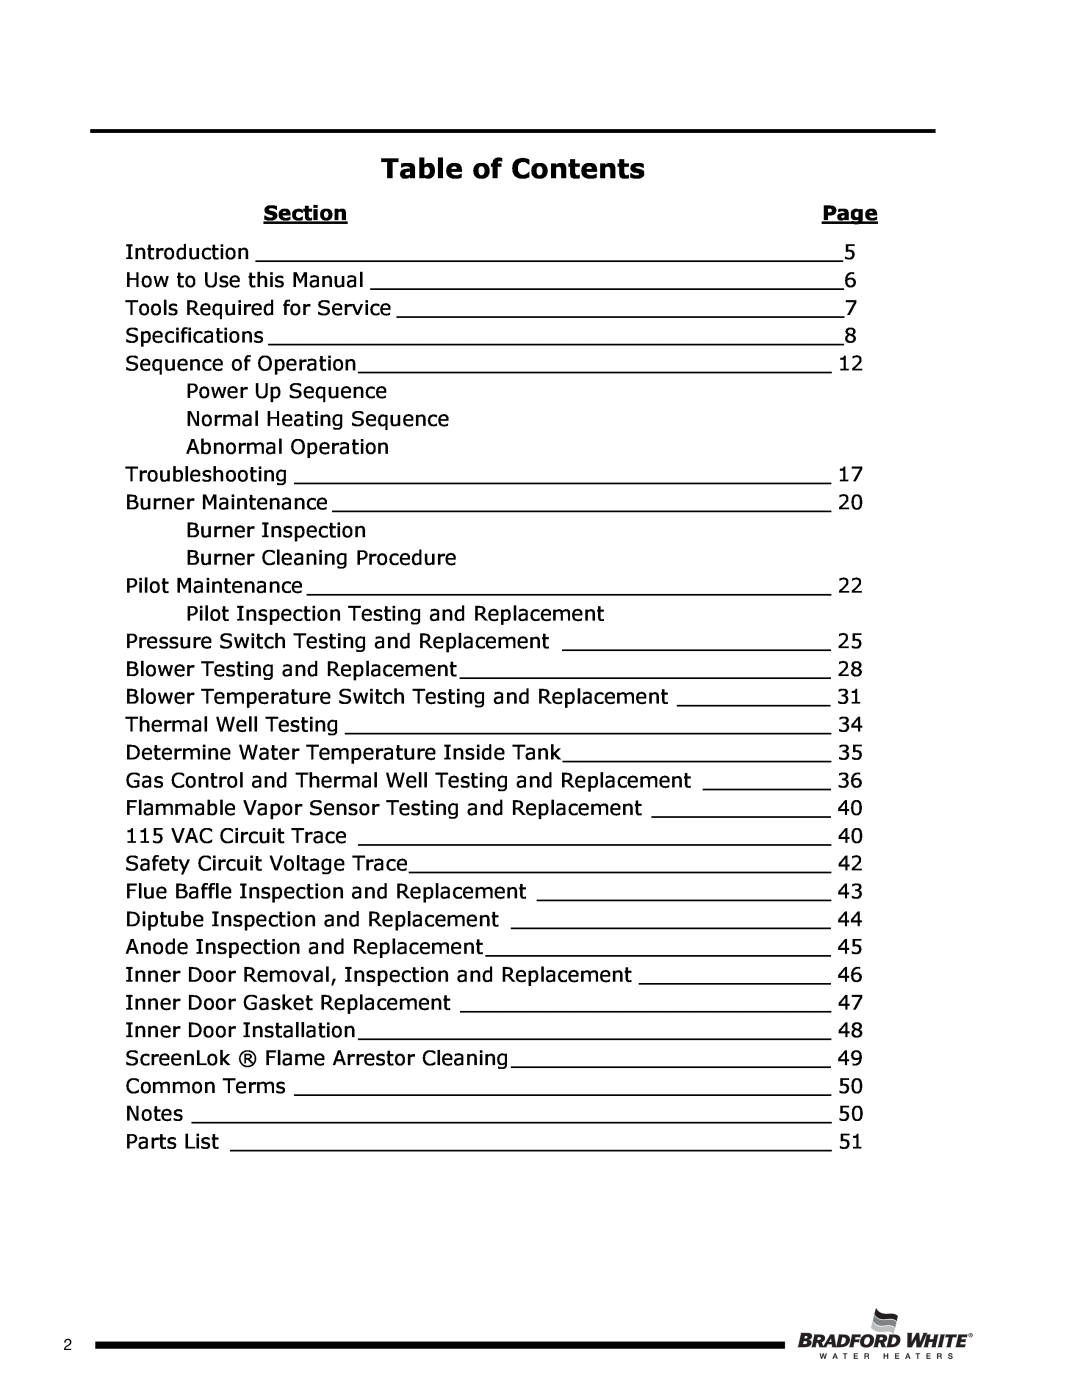 Bradford-White Corp U2TW50T*FRN, UTW450S60FR*N, UTW465S60FR*N, U2TW65T*FRN, U1TW60T*FRN Section, Page, Table of Contents 